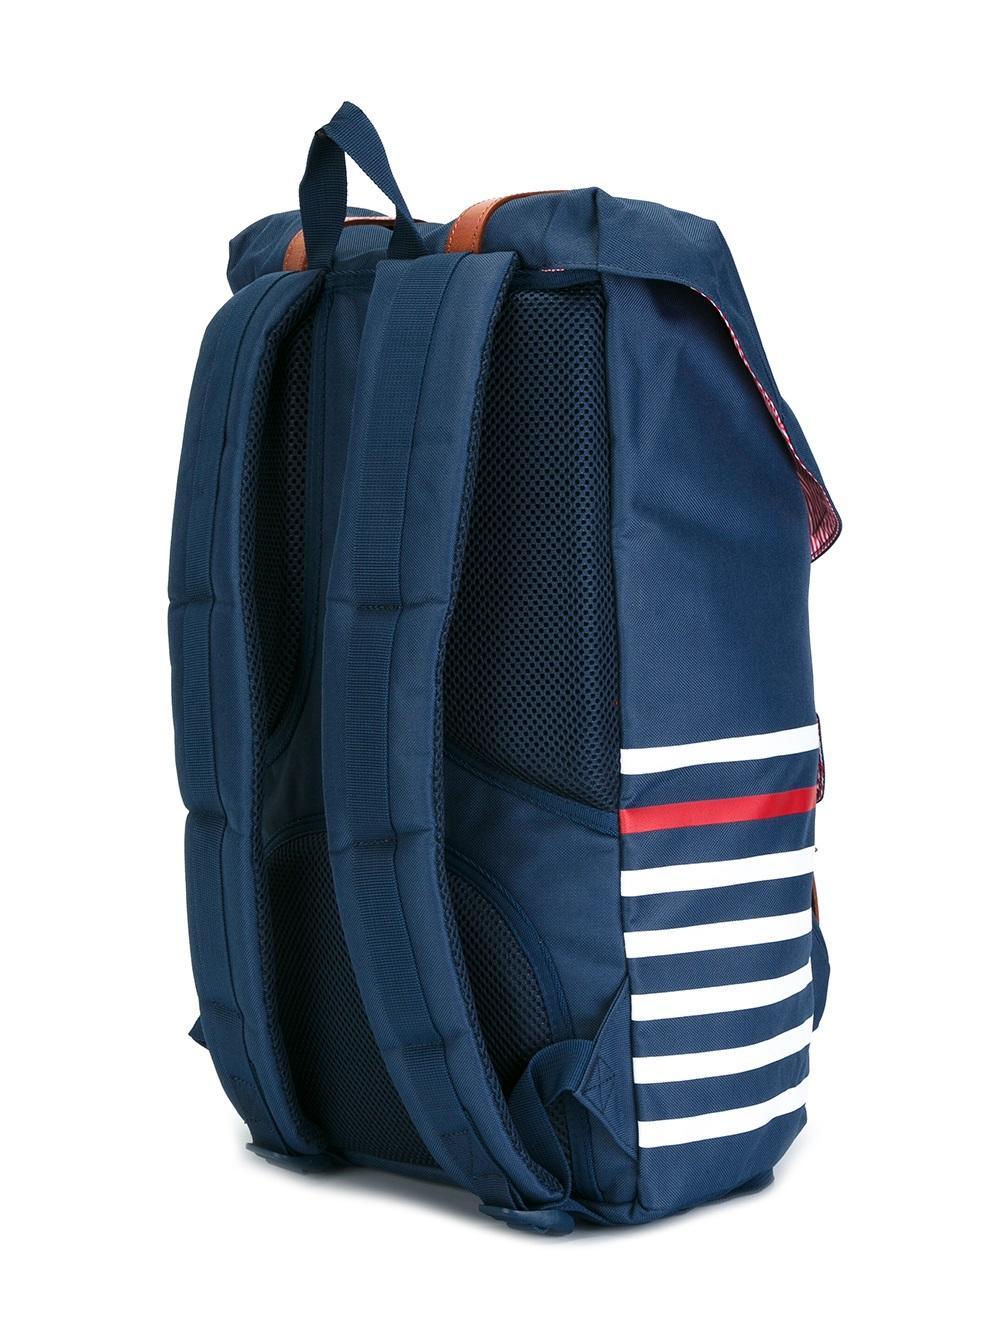 Lyst - Herschel Supply Co. Navy Retreat Backpack in Blue for Men